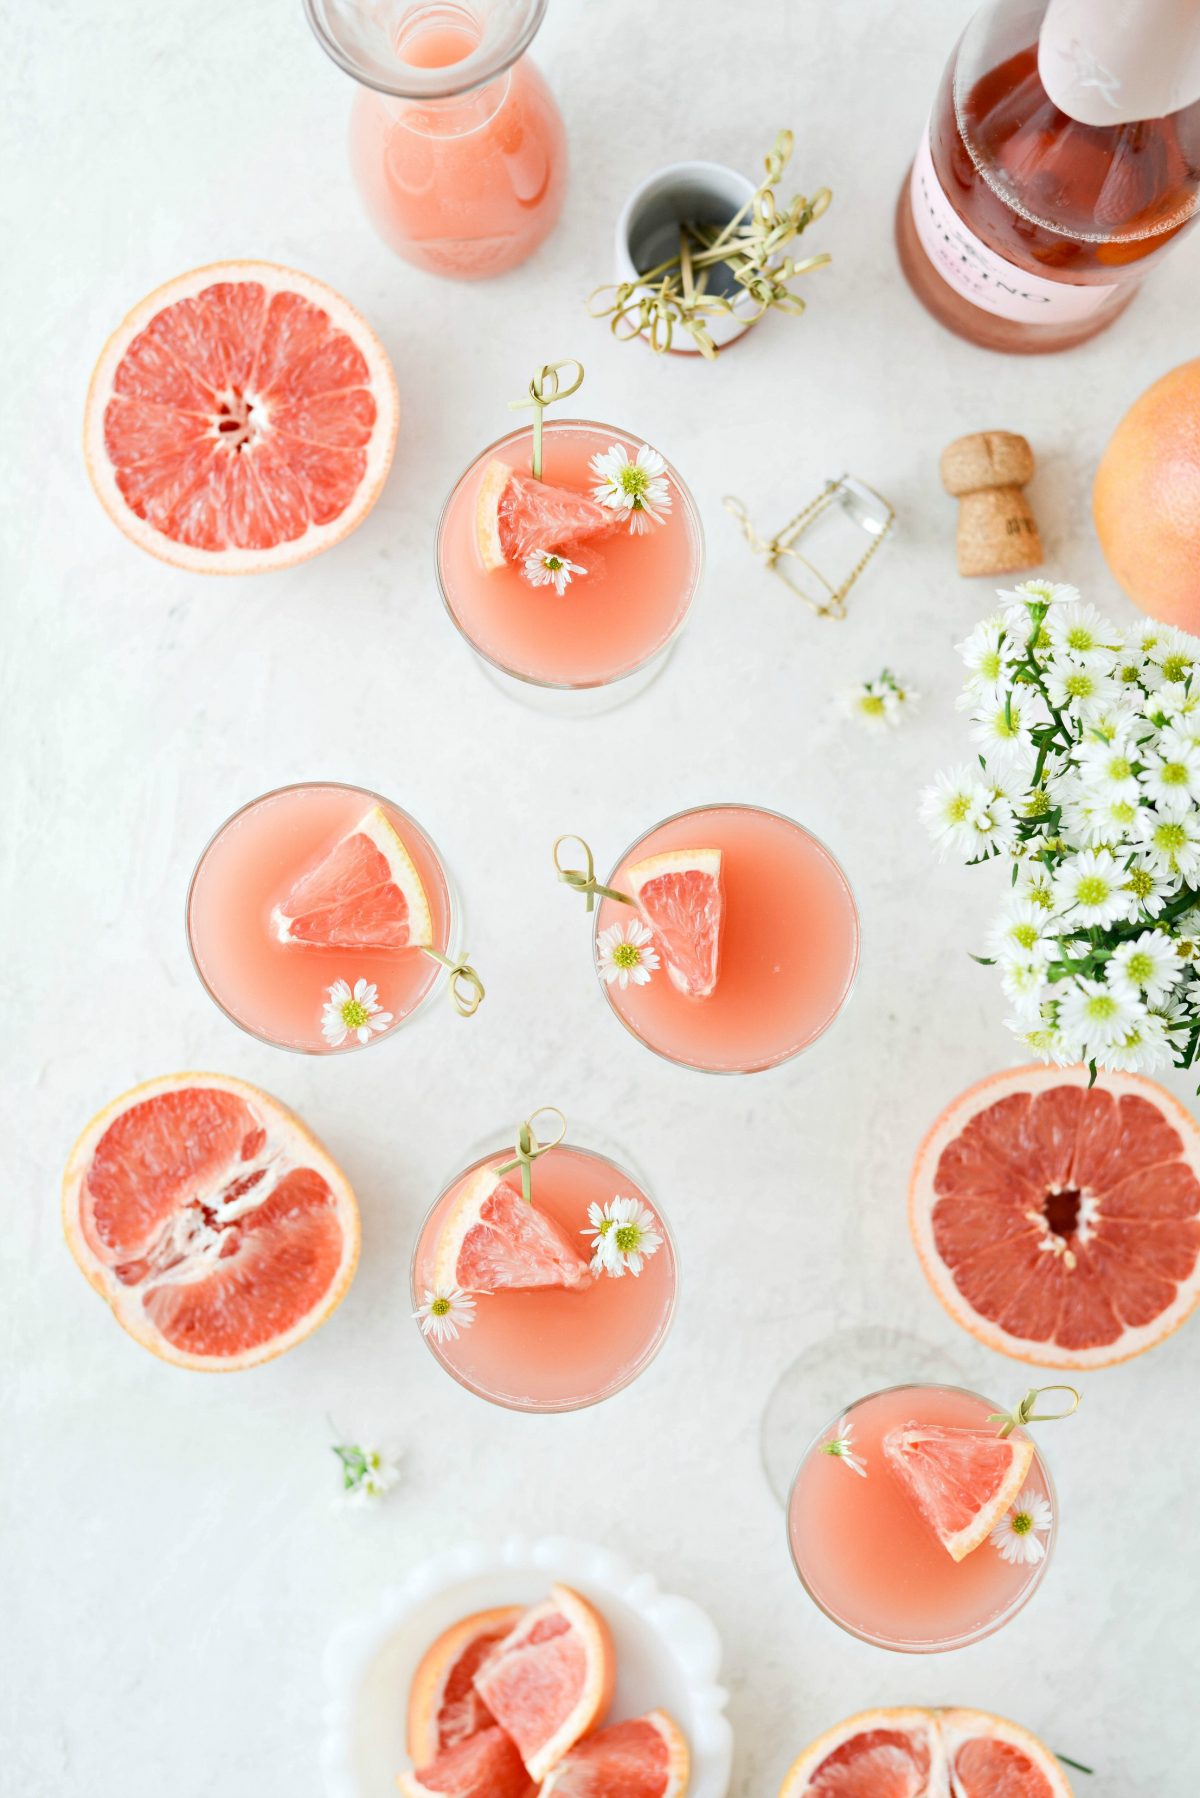 Greippirosé Mimosas l SimplyScratch.com #adult #beverage #greippi #rose #mimosa #easter #Brunssi #mothersday